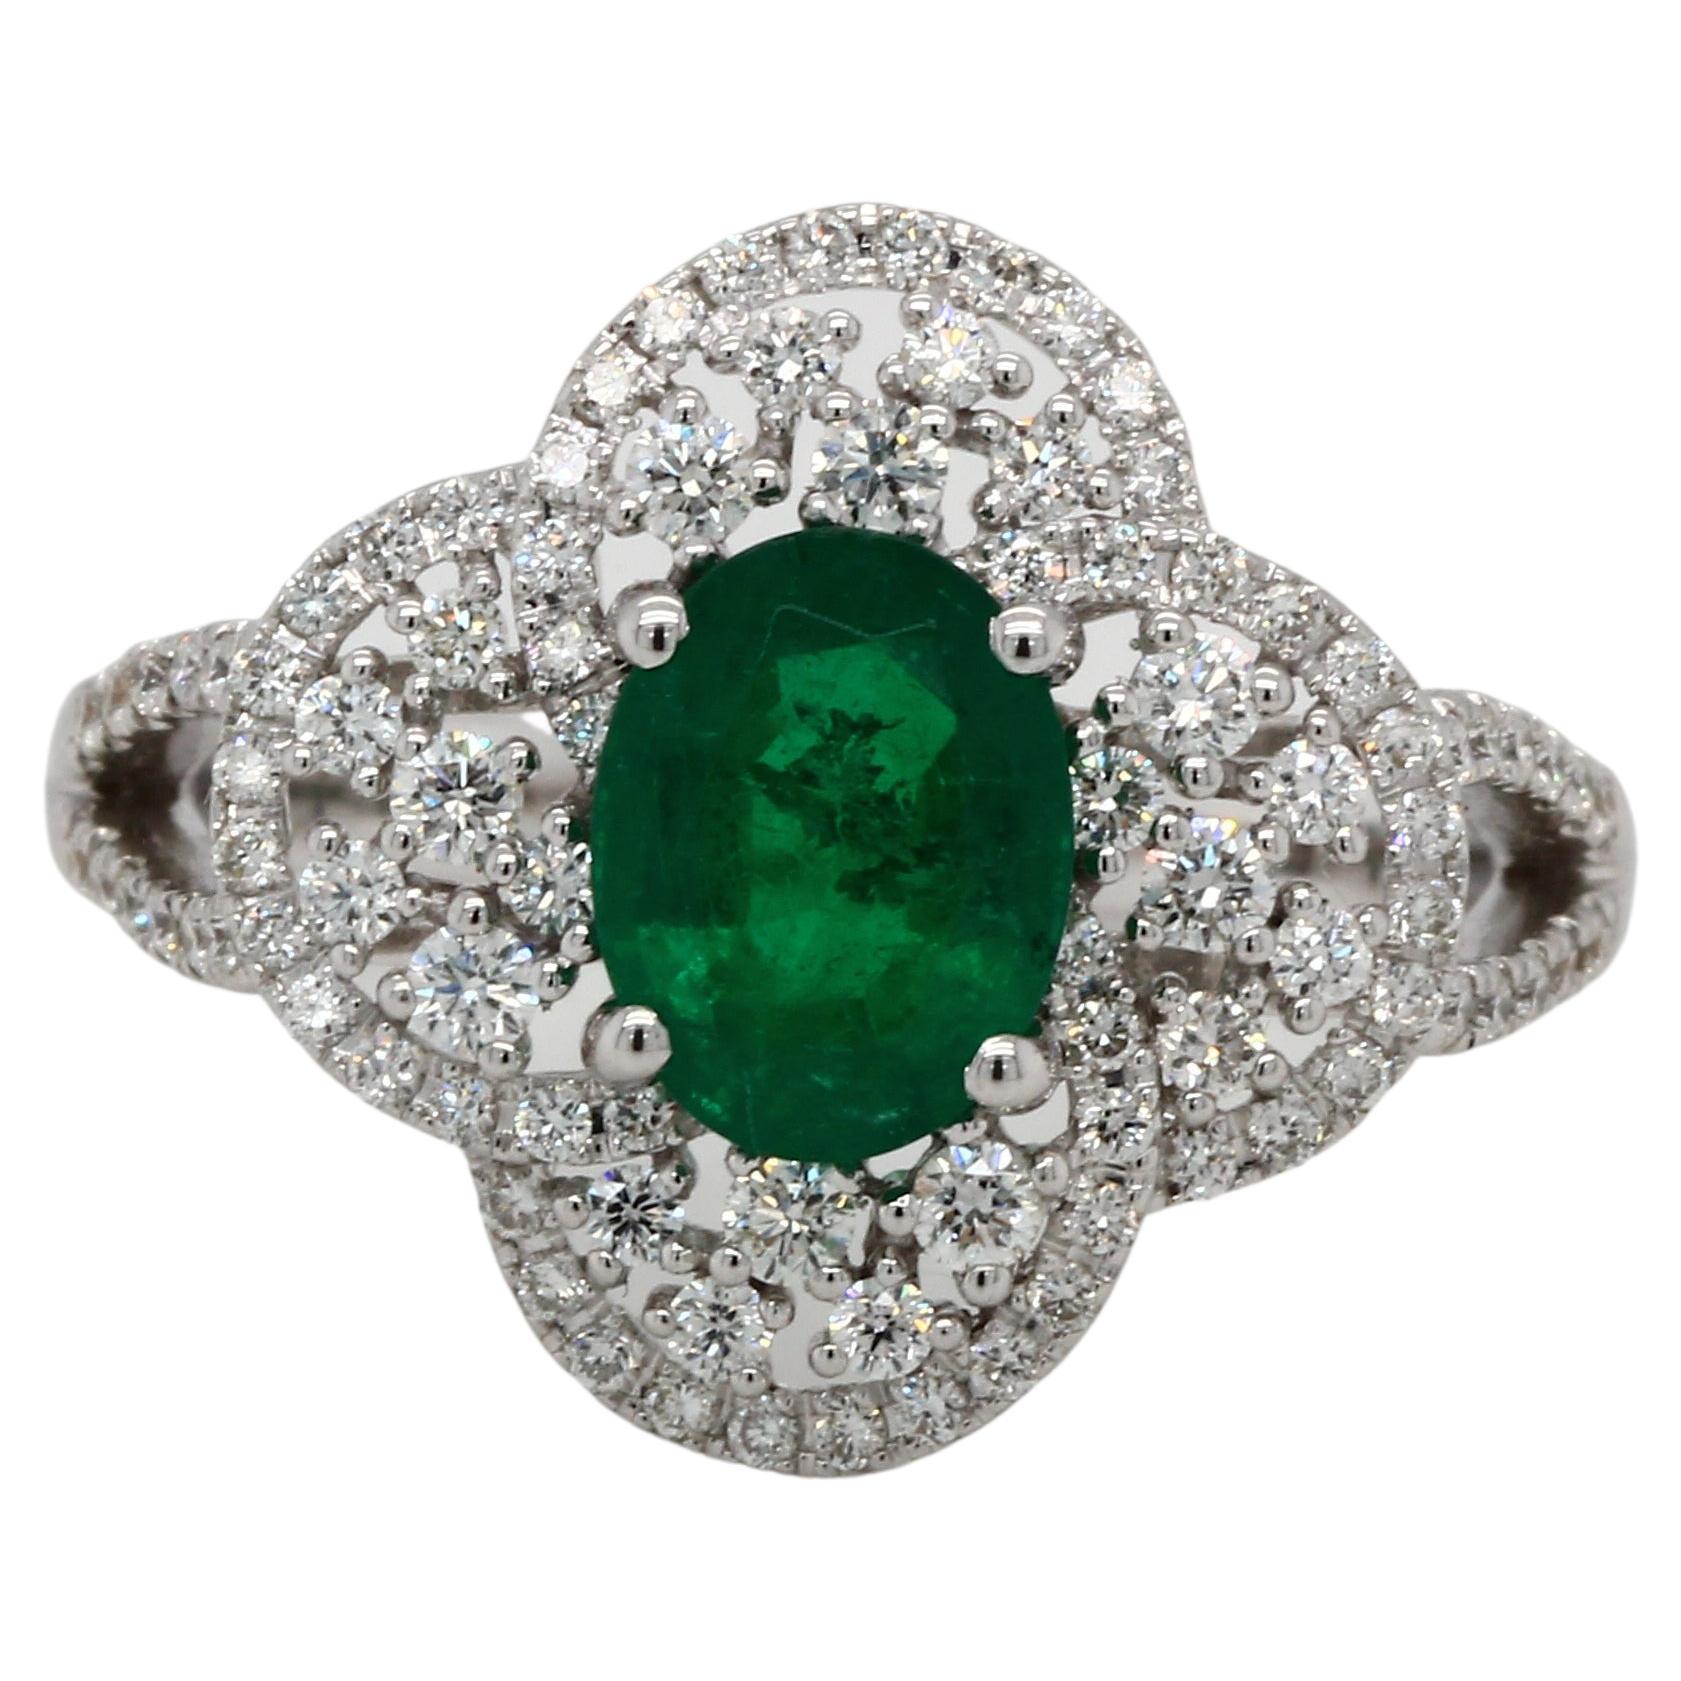 Emerald and Diamond Ring in 18 Karat Gold